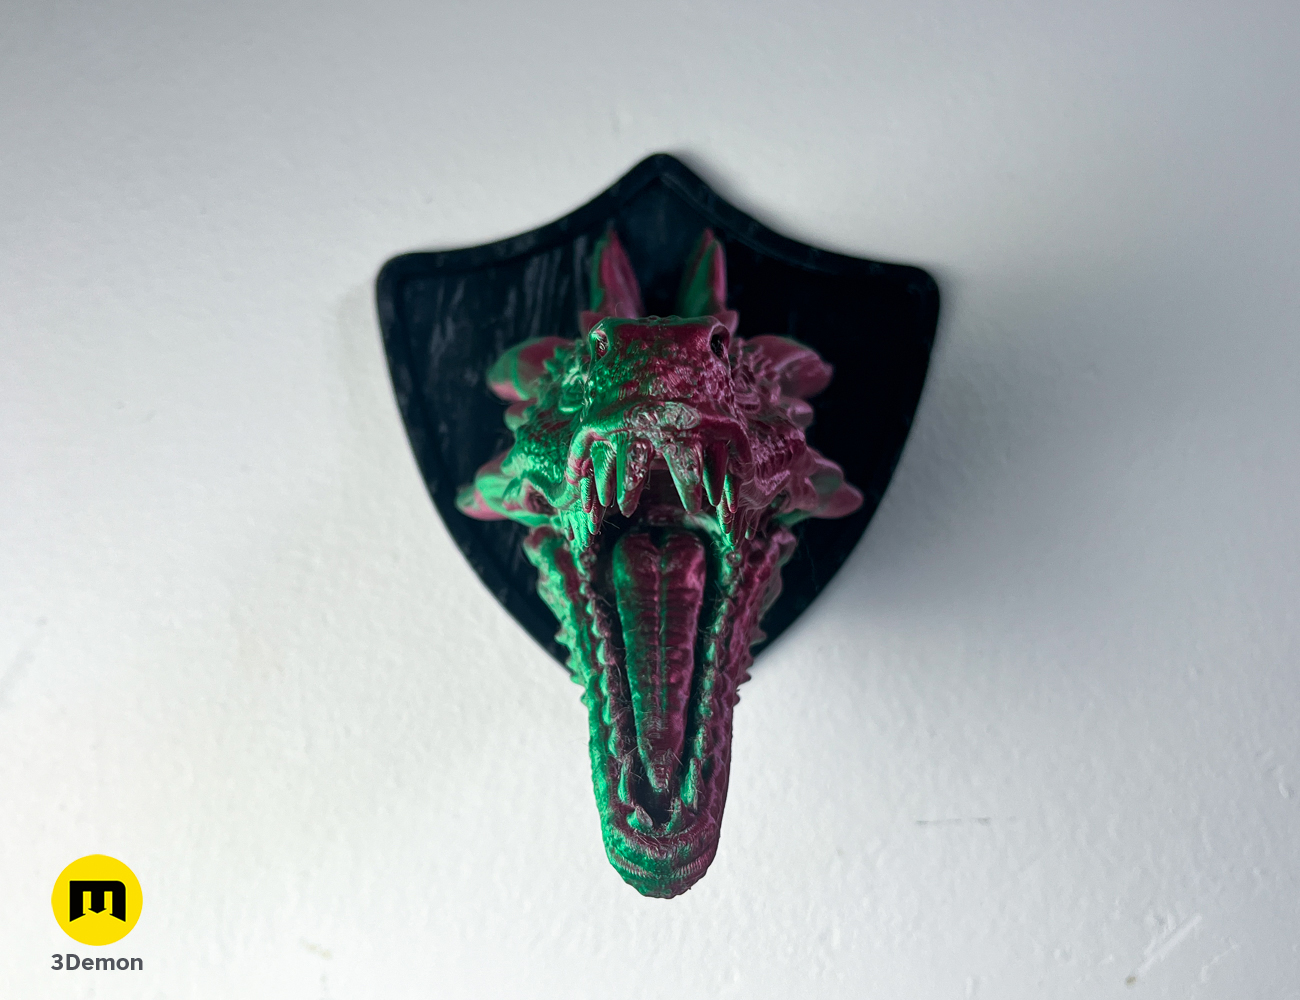 3d Printed Geometric Dragon Head for Wall Decor, Ready to hang